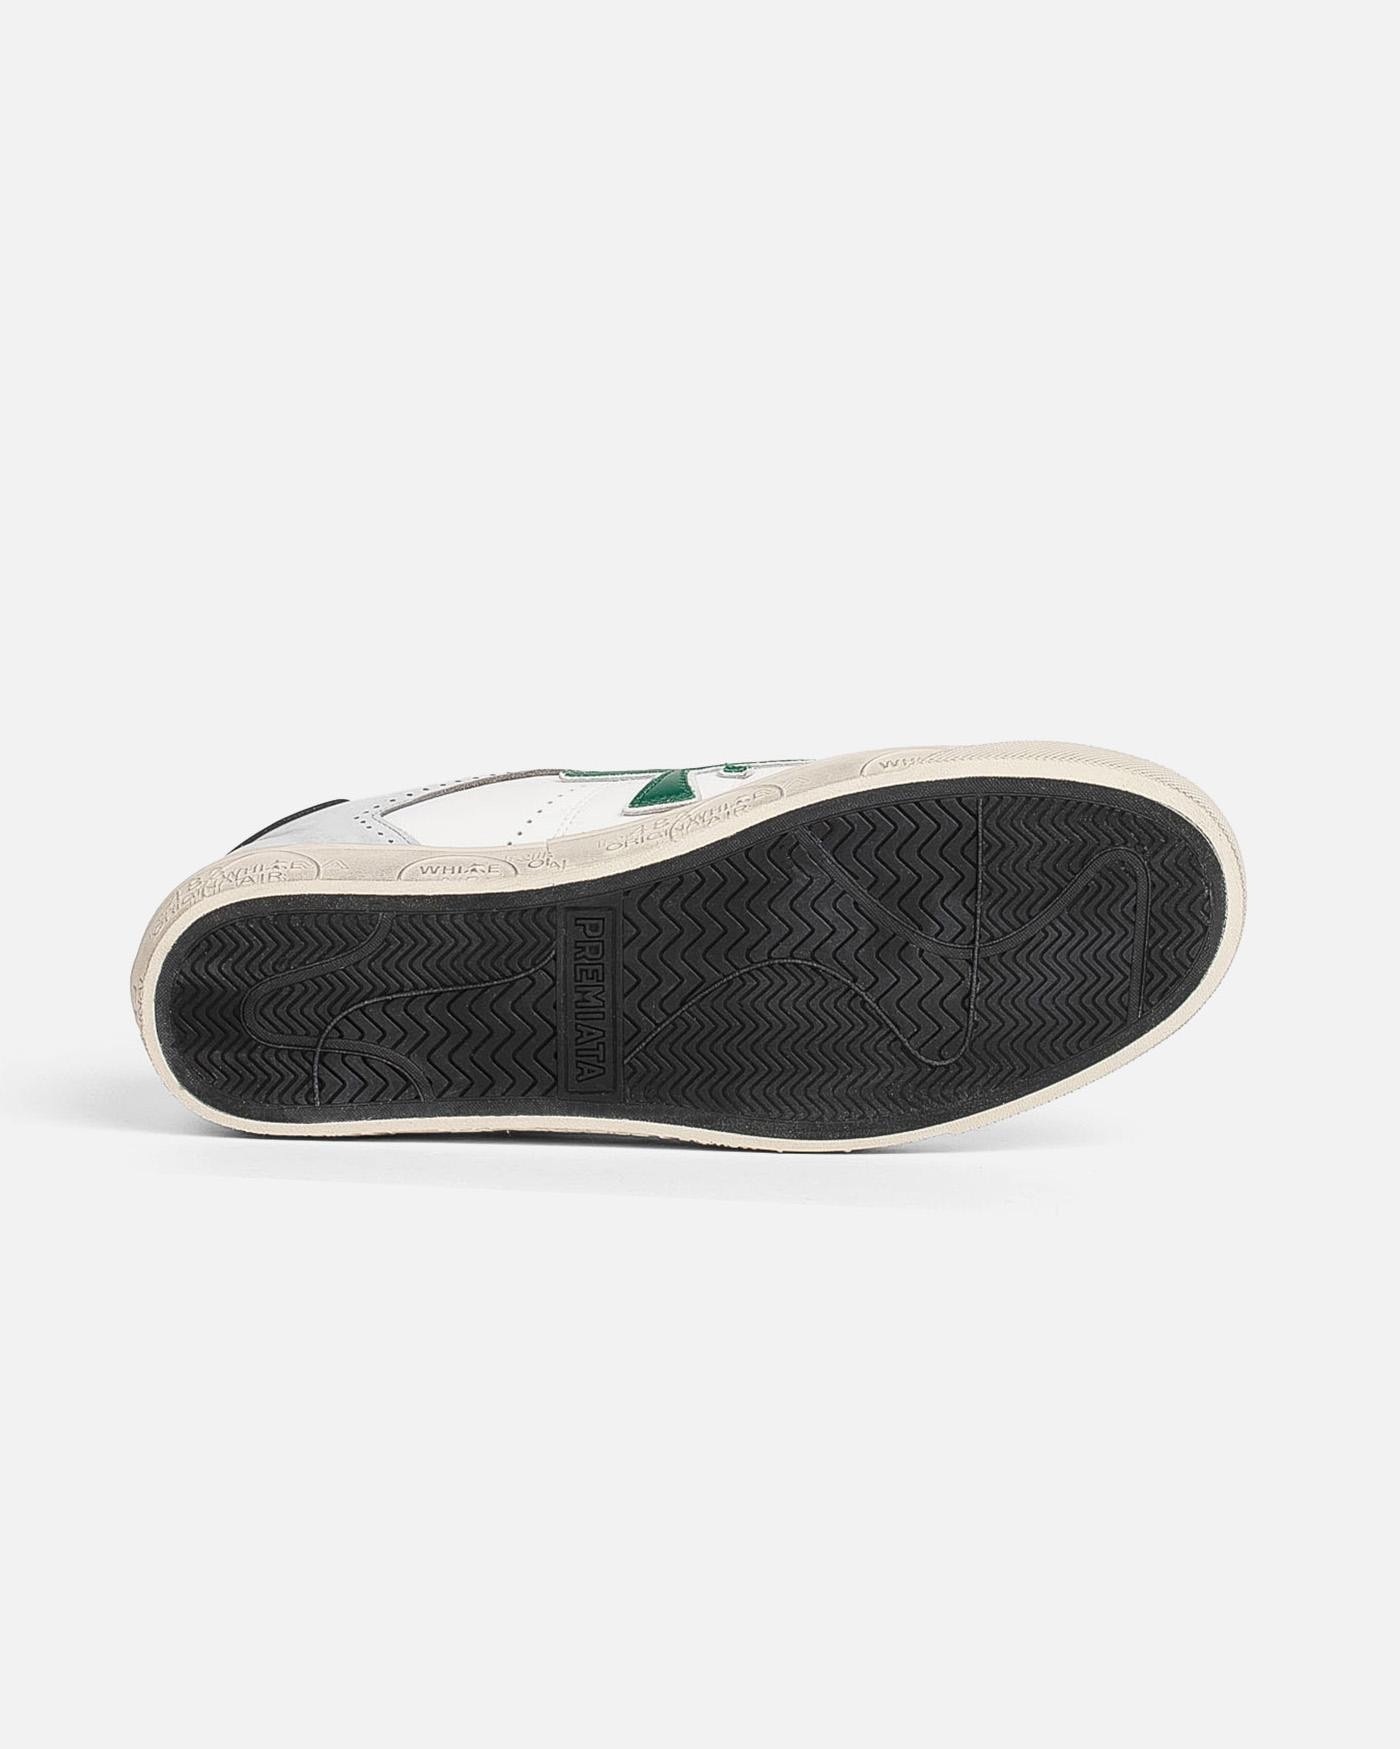 premiata-zapatillas-steven-6651-sneakers-white-blancas-3